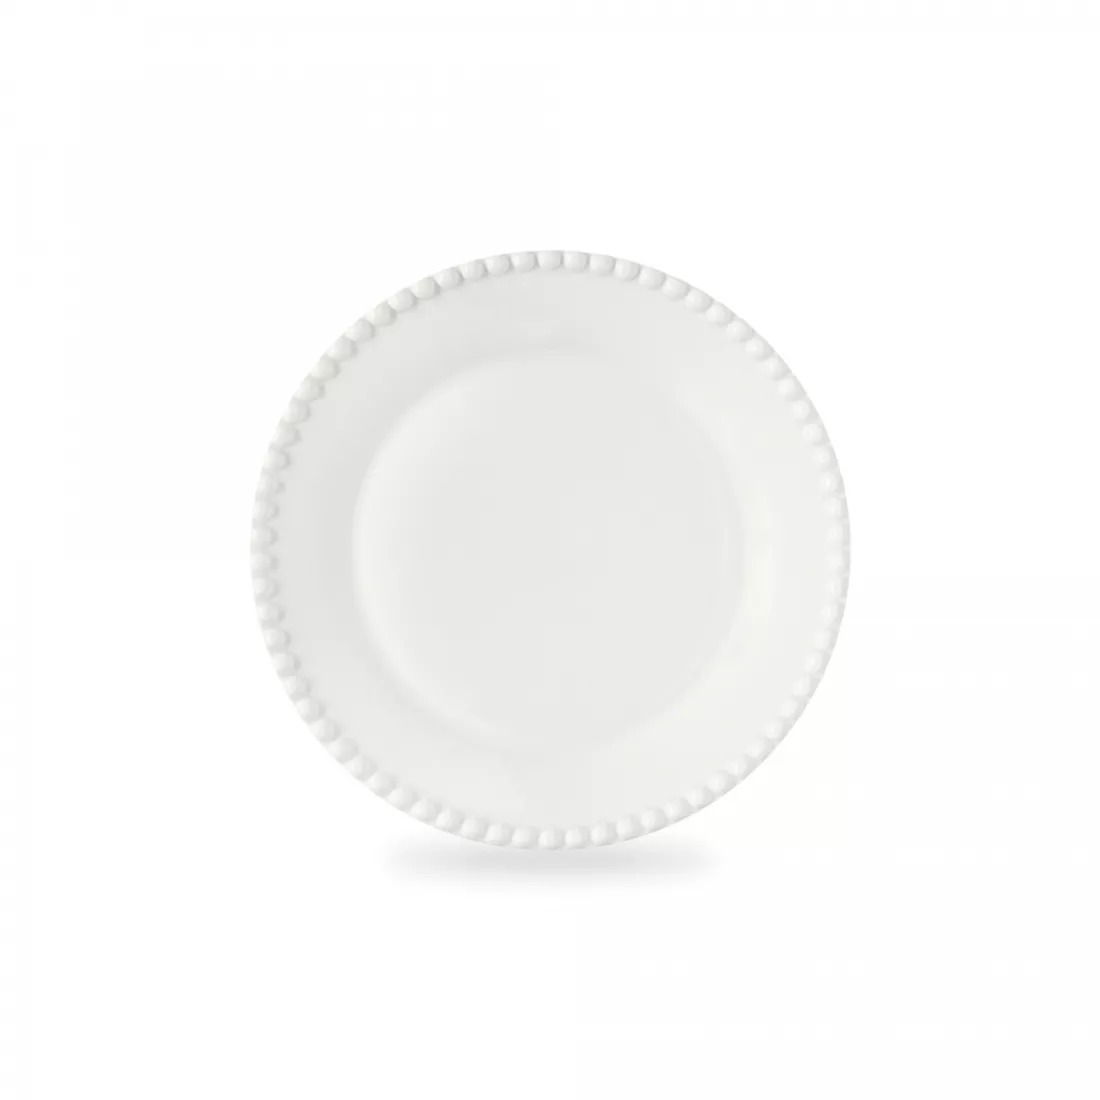 Тарелка закусочная Easy life Tiffany белый 19 см